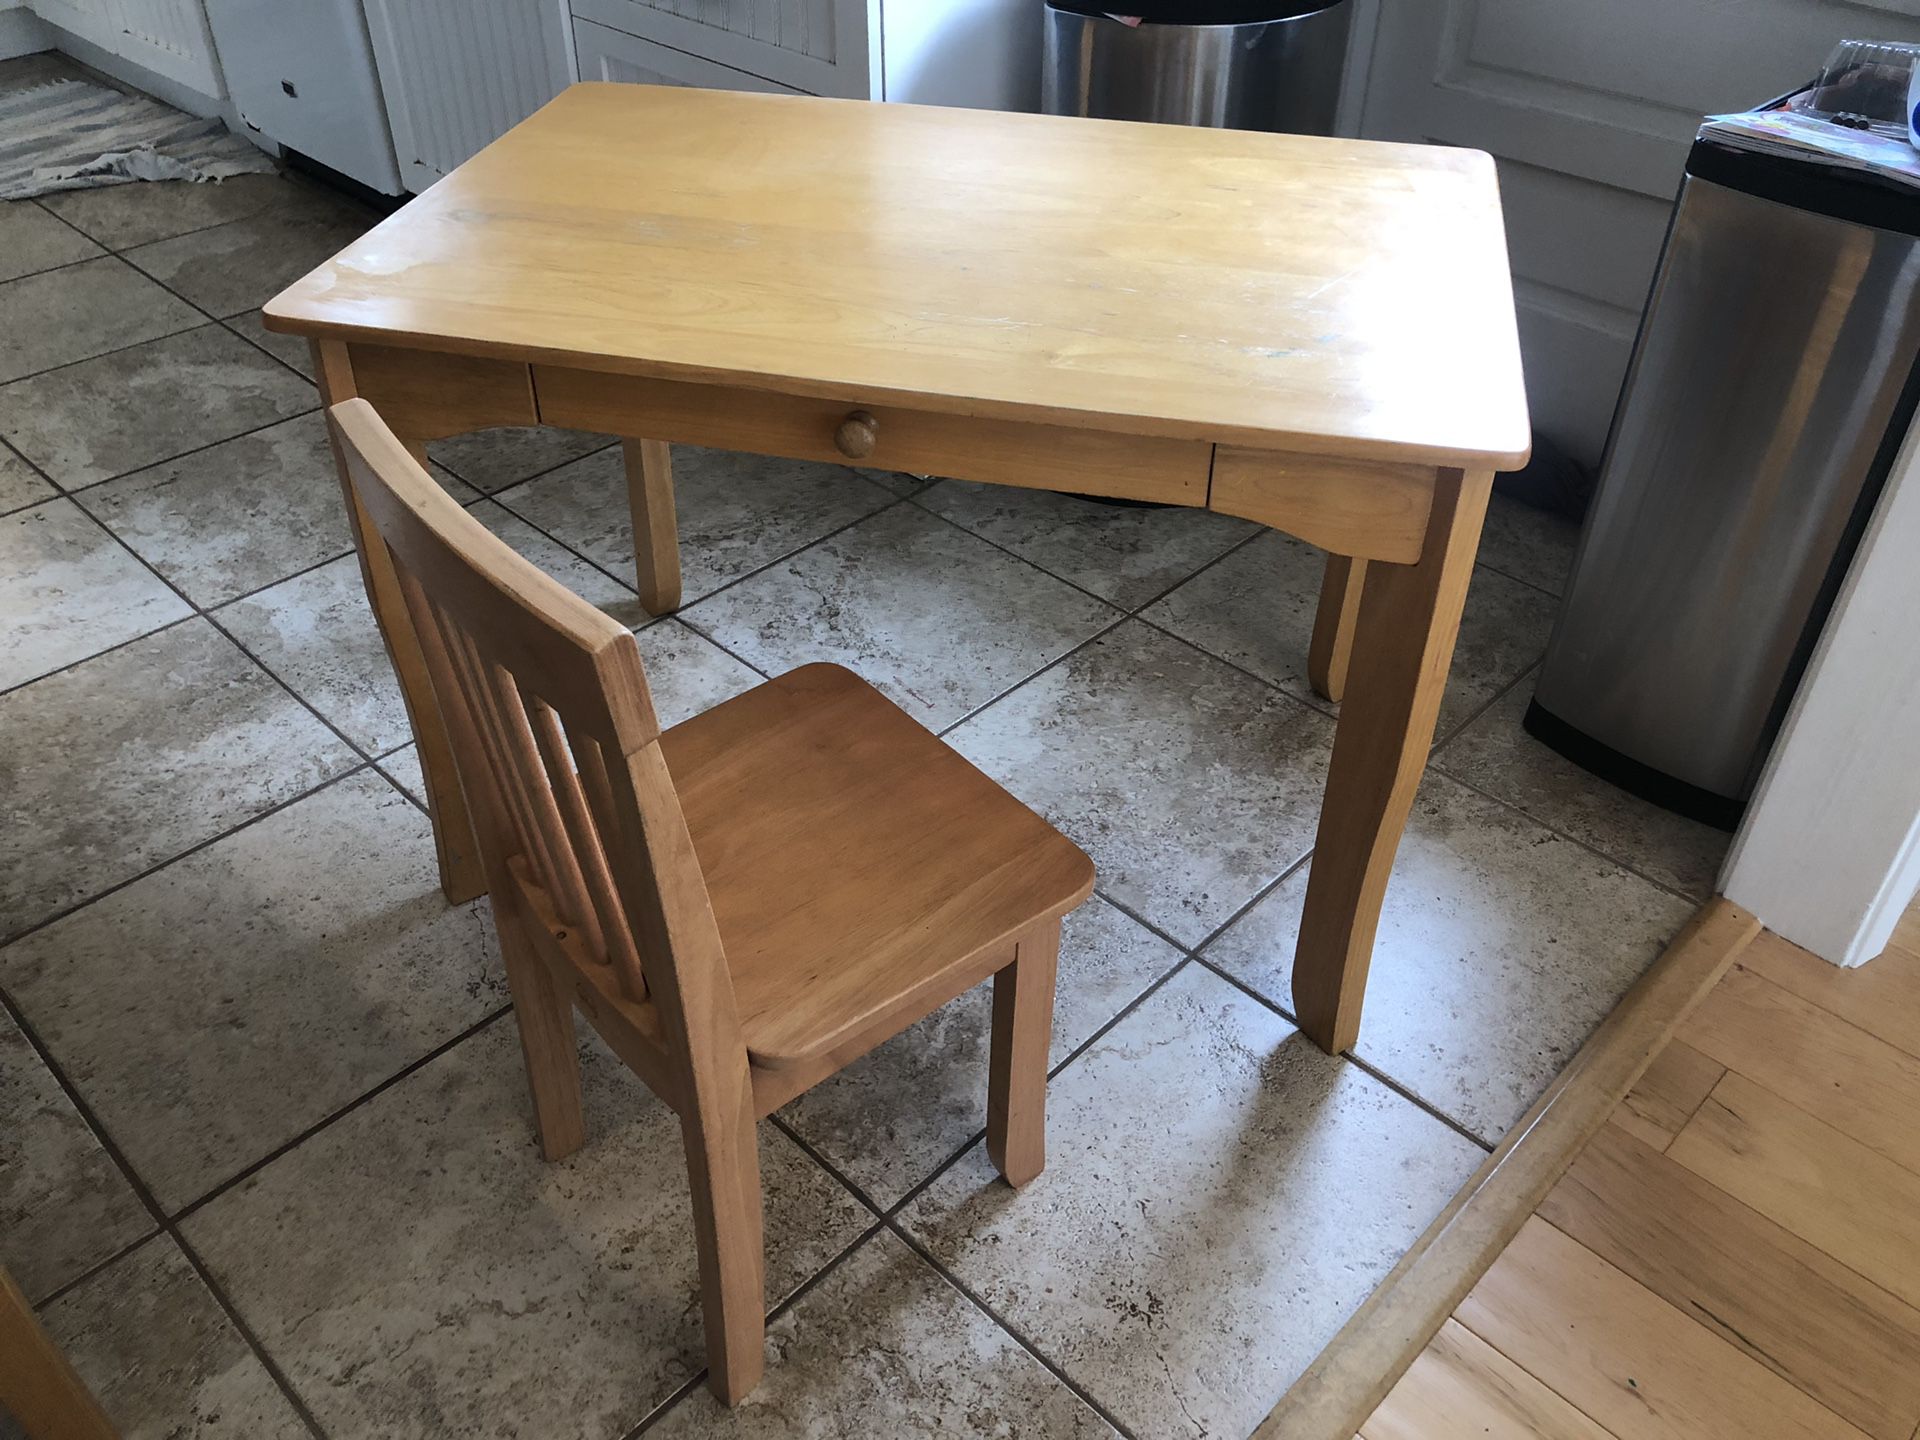 Kidkraft table and chair